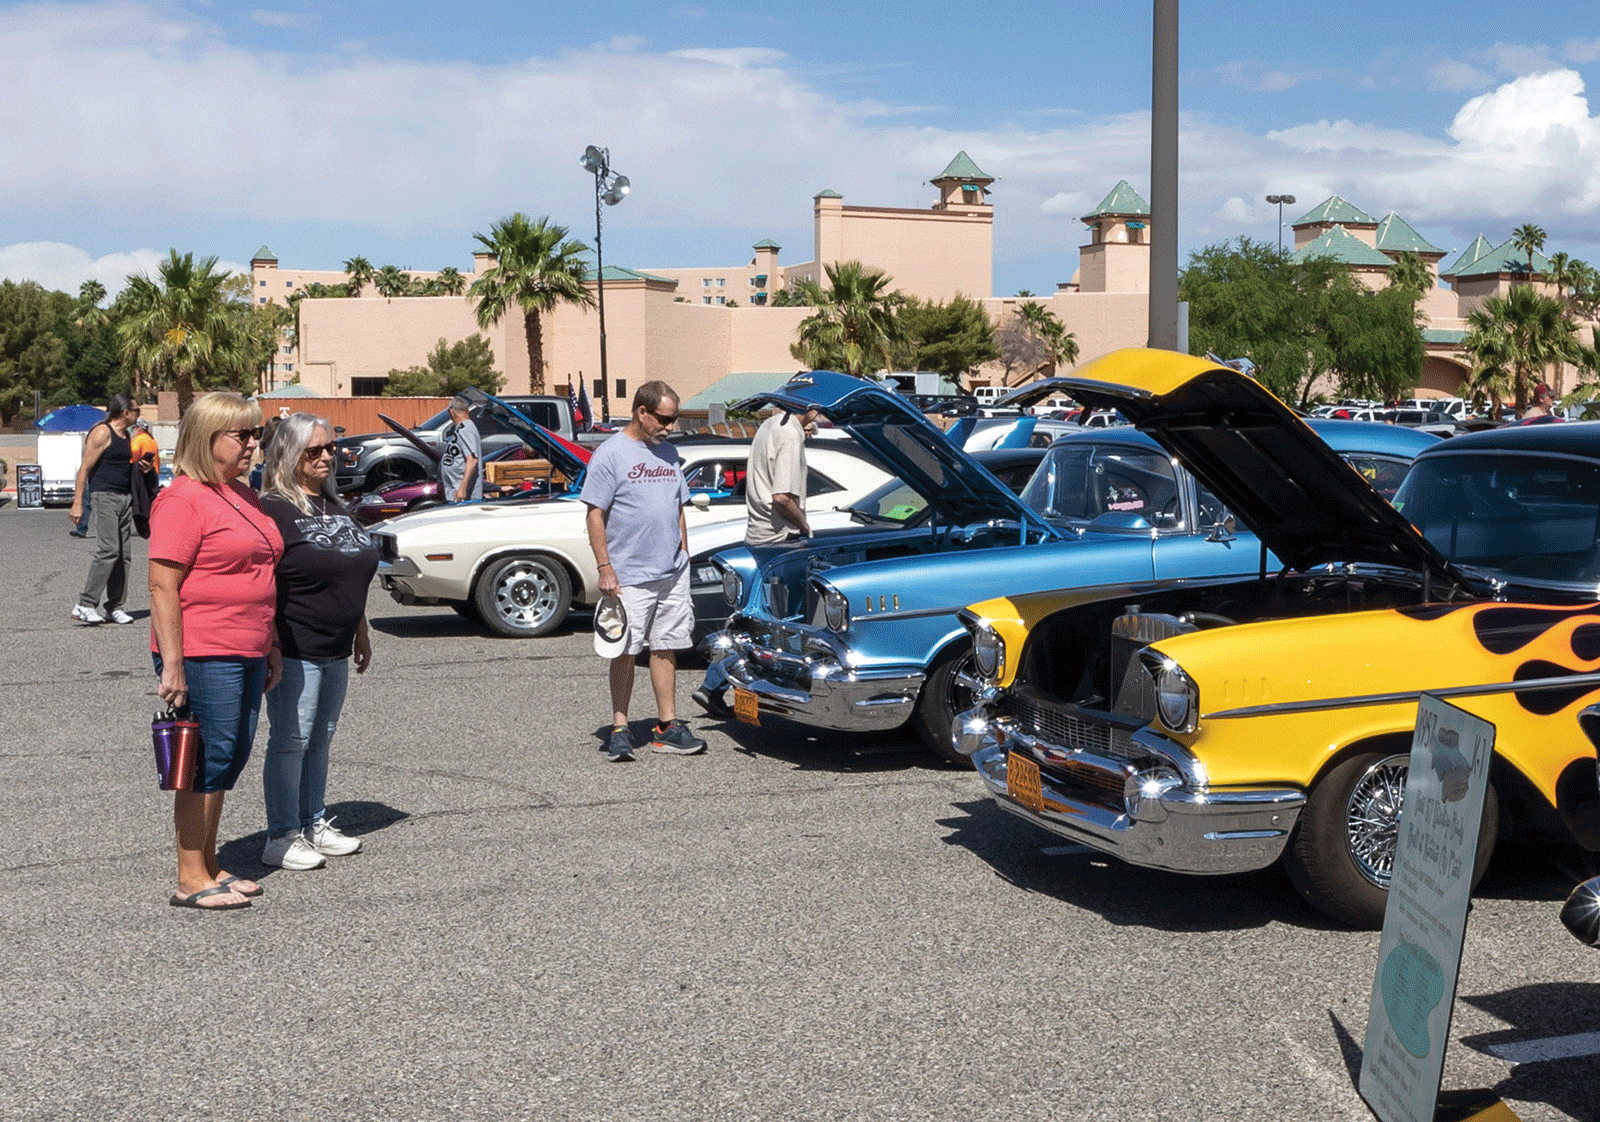 car show in mesquite nv nicollebohnen